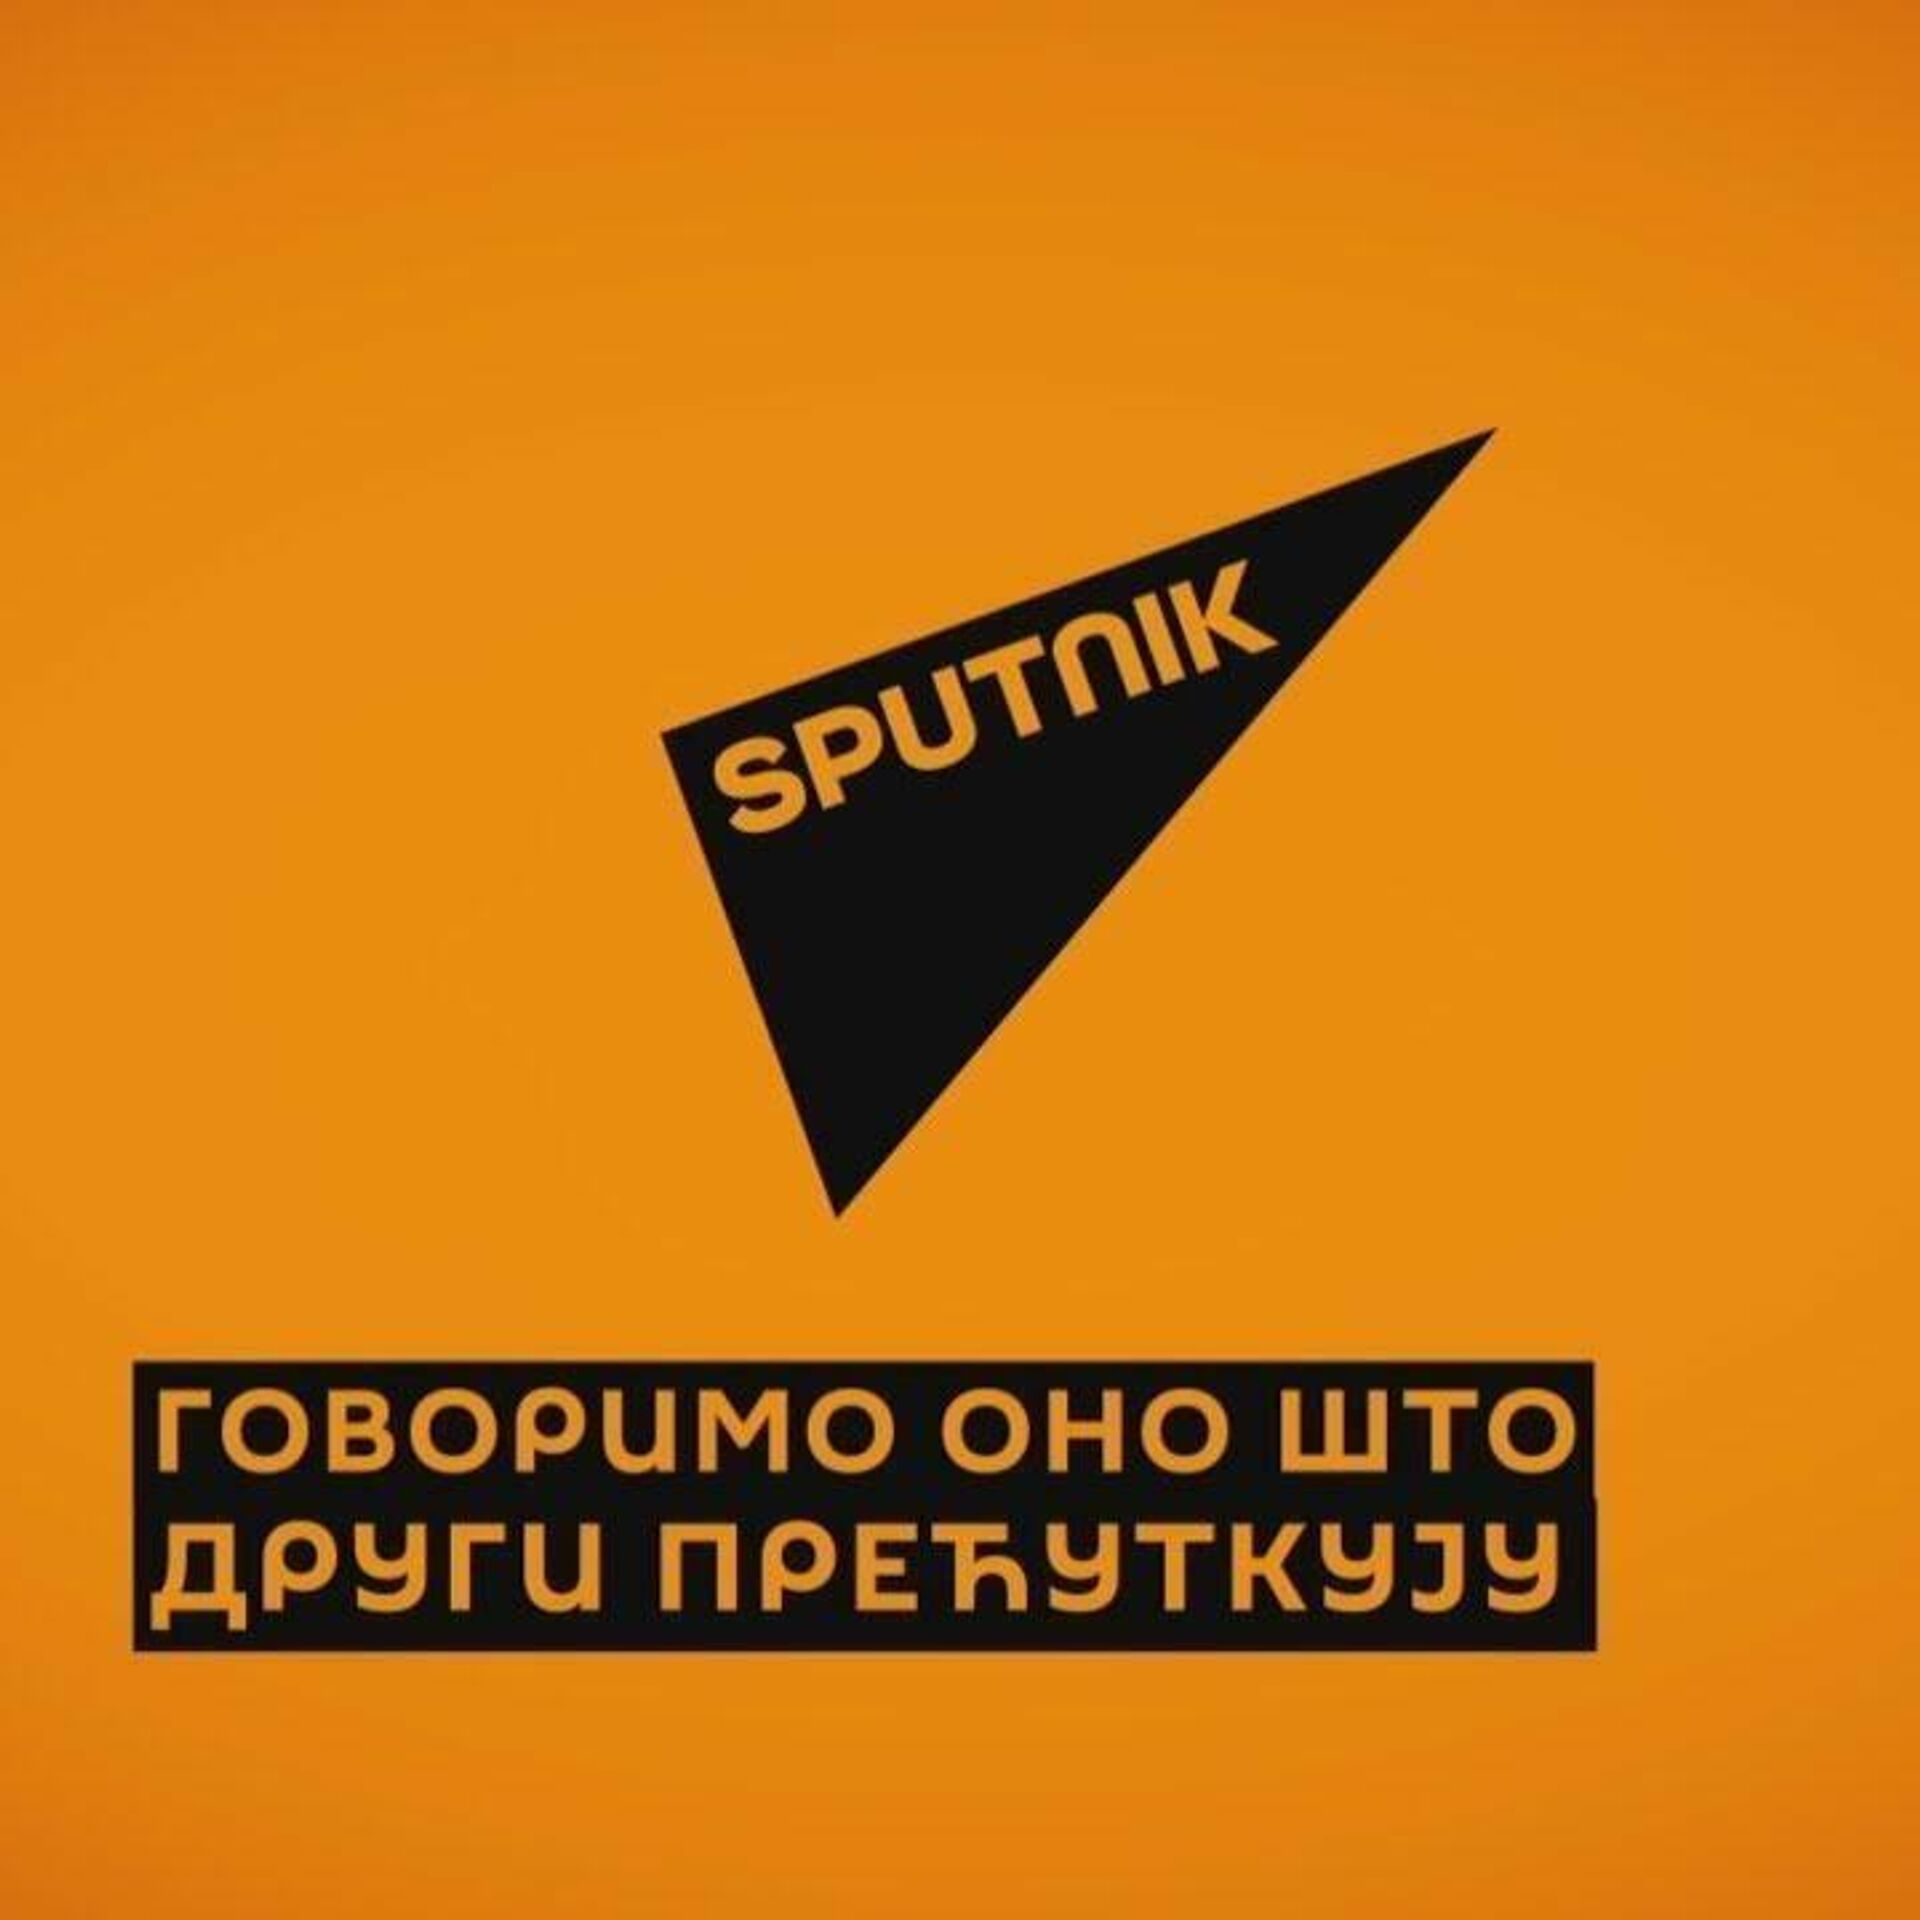 Спутник сайт. Sputnik логотип. Агентство Спутник. Радио Sputnik. Радио Спутник лого.